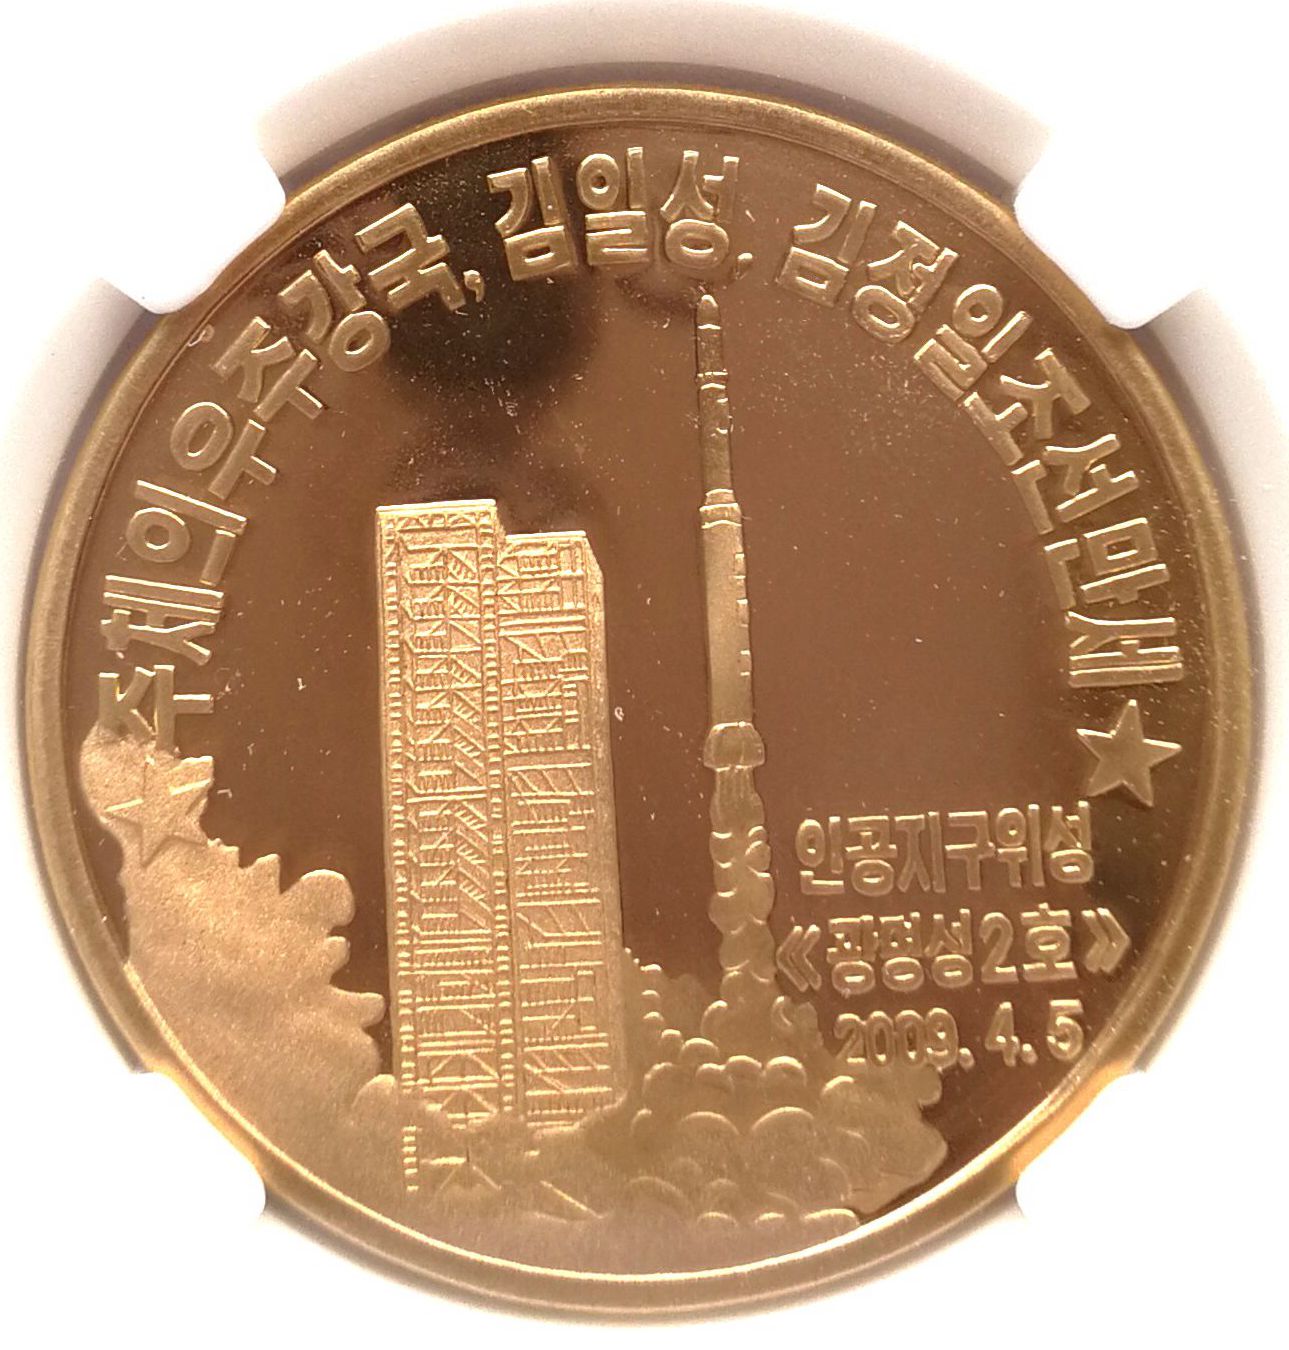 L3307, Korea Proof Coin "Kwangmyongsong Missile" 2016 Bronze 3 pcs, Korean Grade